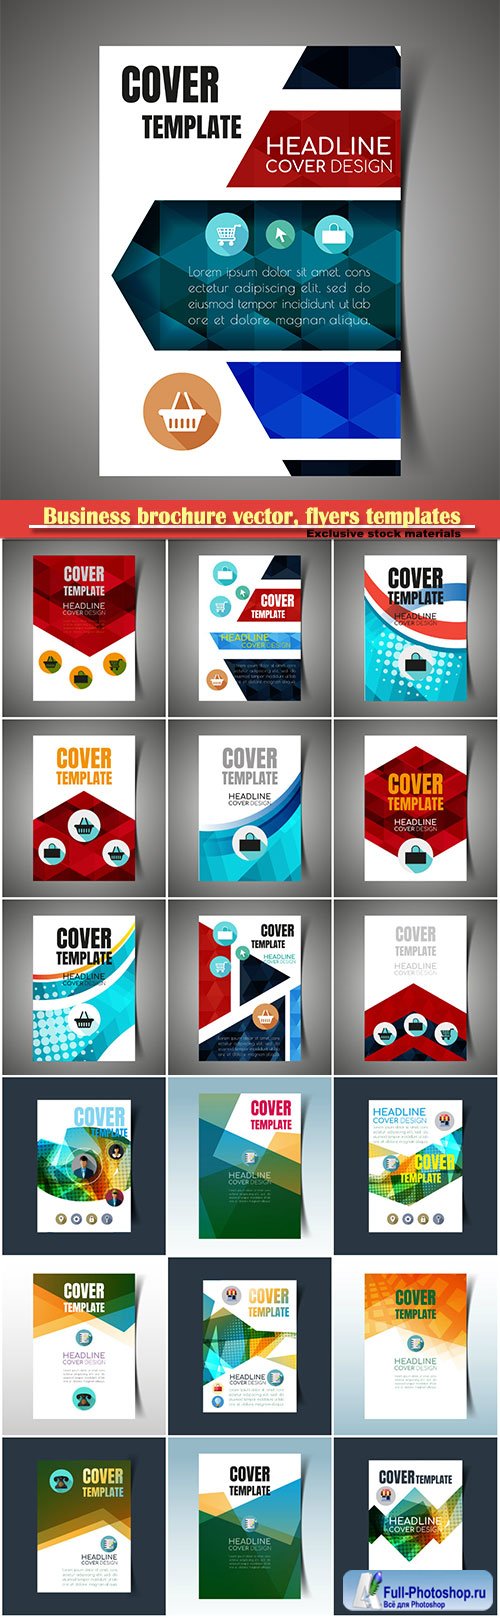 Business brochure vector, flyers templates, report cover design # 94